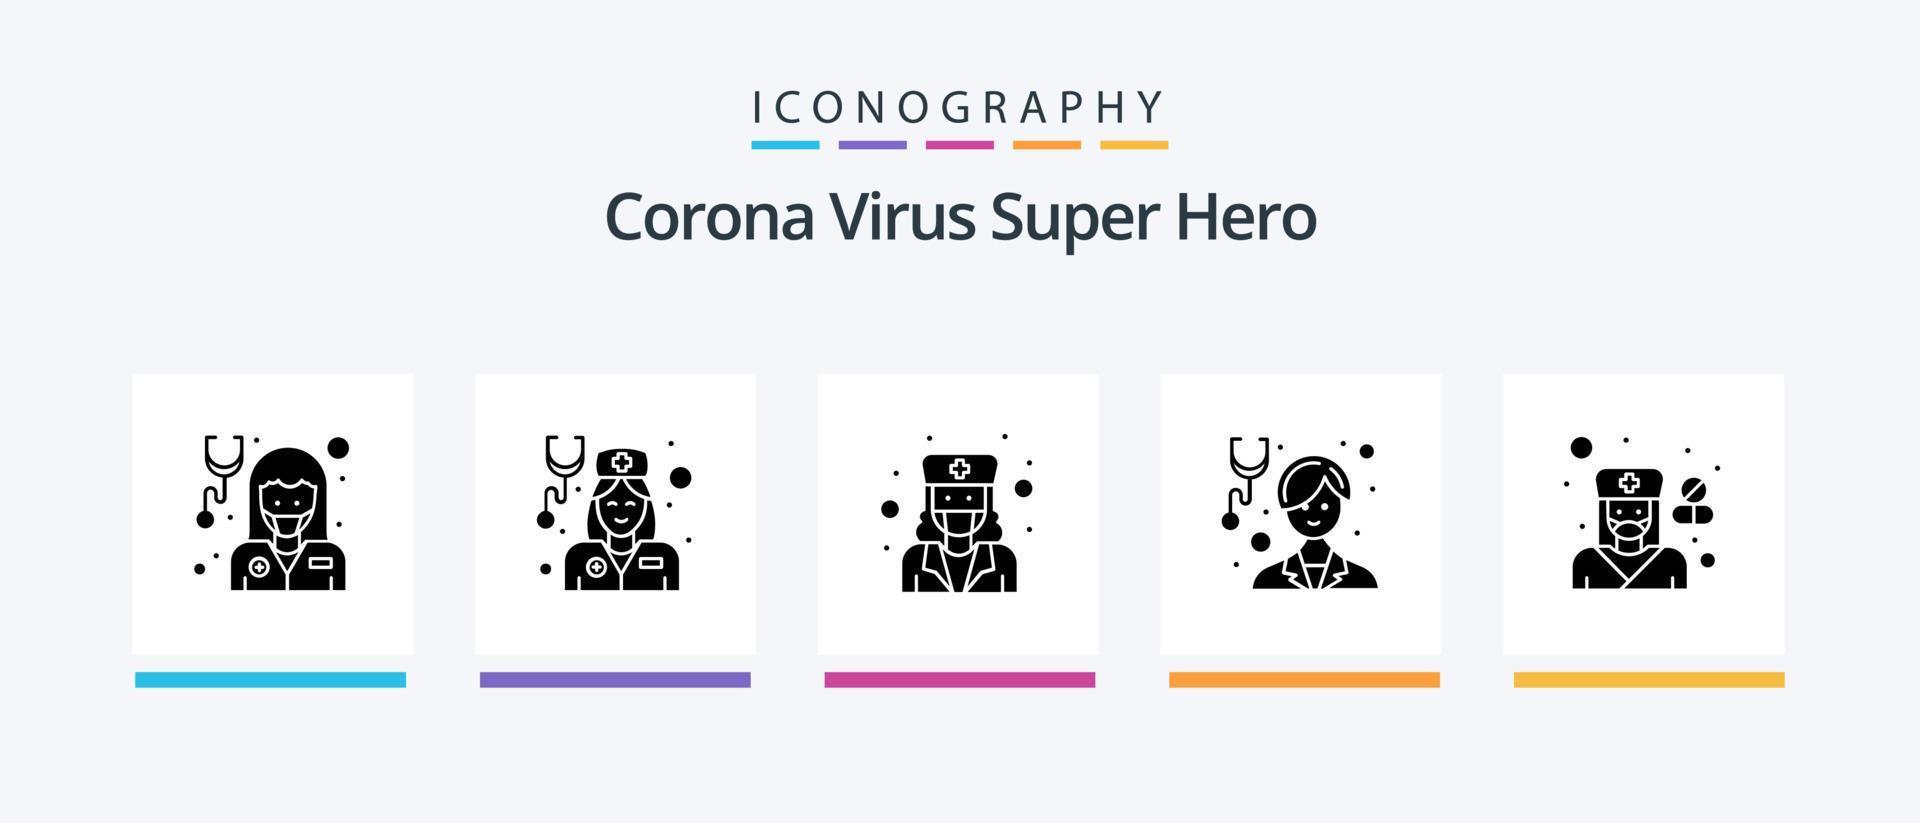 corona vírus super herói glifo 5 ícone pacote Incluindo fêmea. enfermeira. fêmea. médico. garota. criativo ícones Projeto vetor